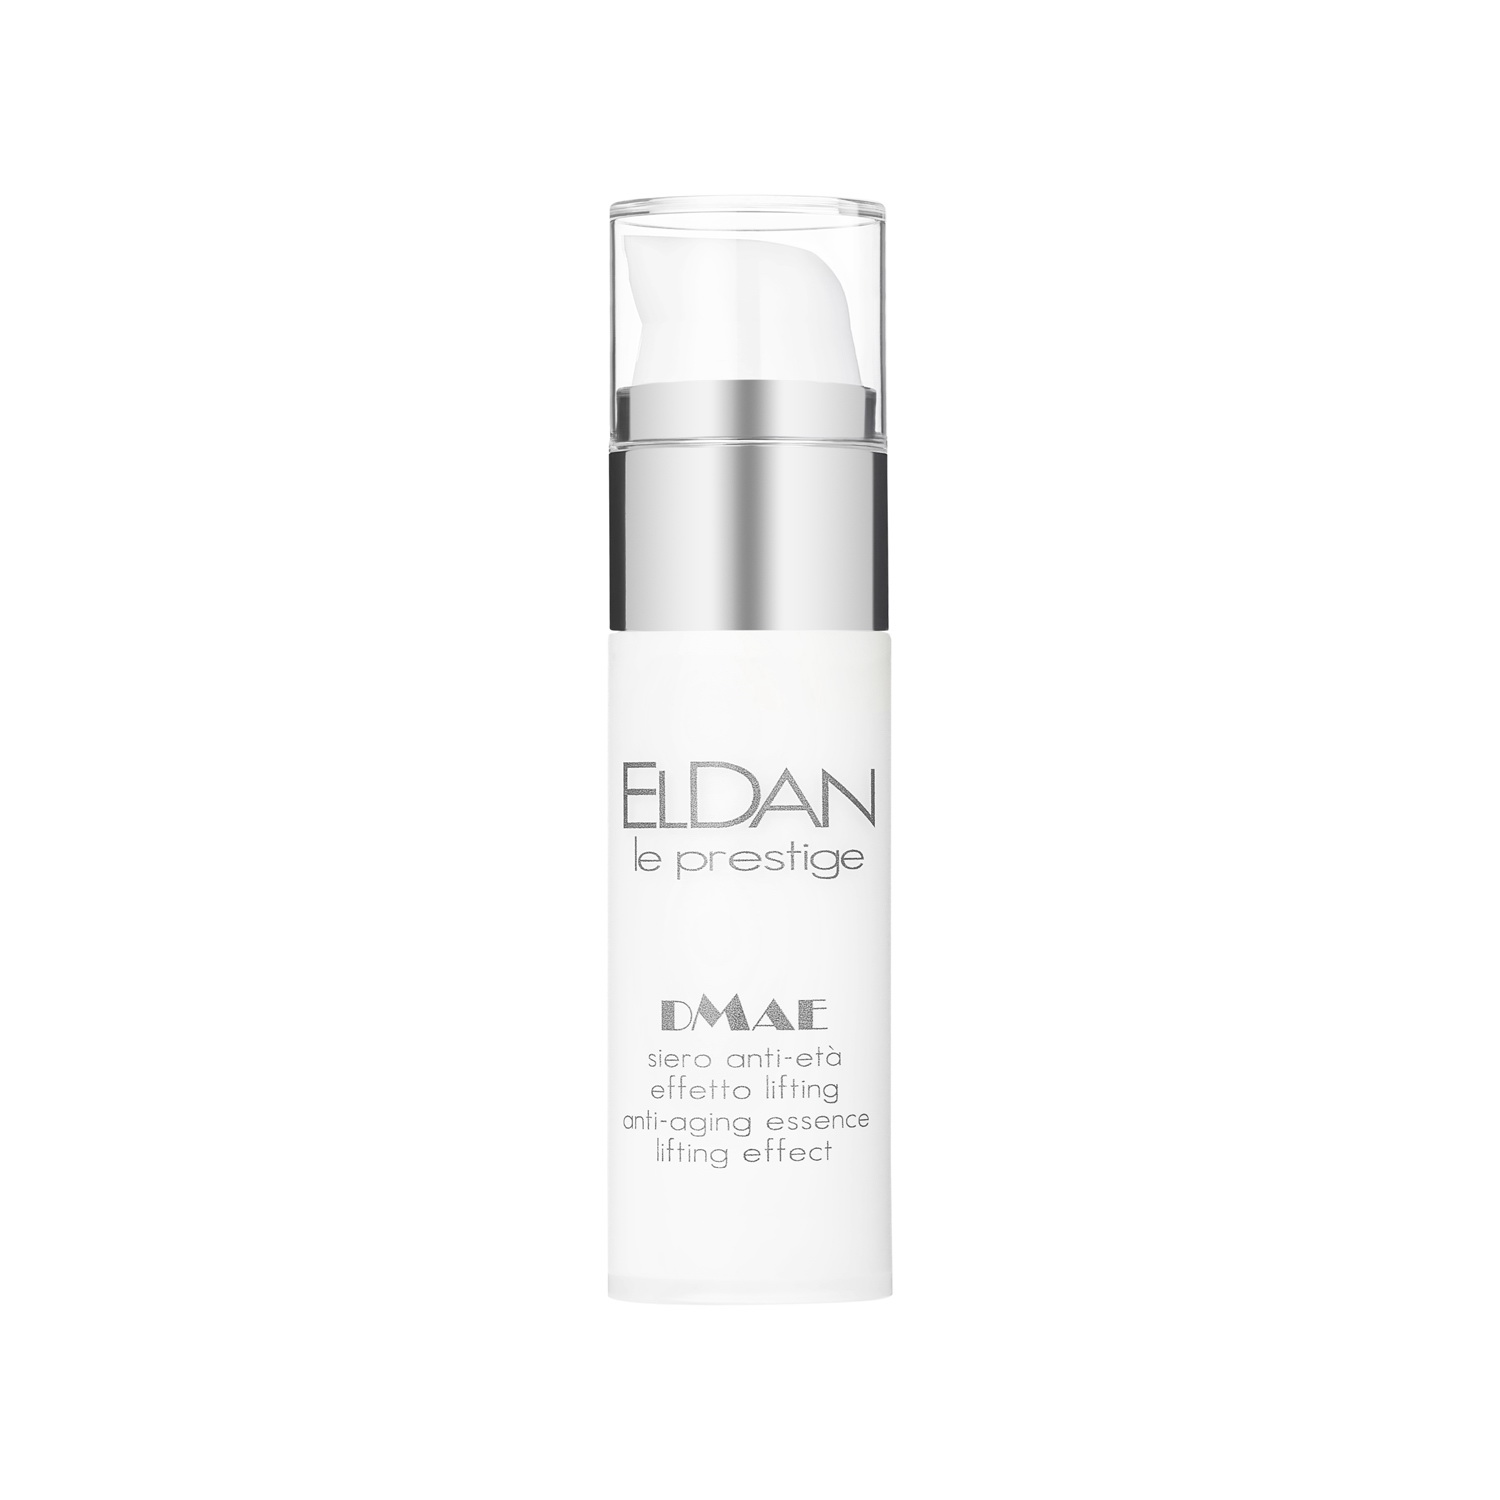 Сыворотка для лица Eldan Cosmetics DMAE Anti-Aging Essence Lifting Effect, 30 мл сыворотка для лица eldan cosmetics dmae anti aging essence lifting effect 30 мл